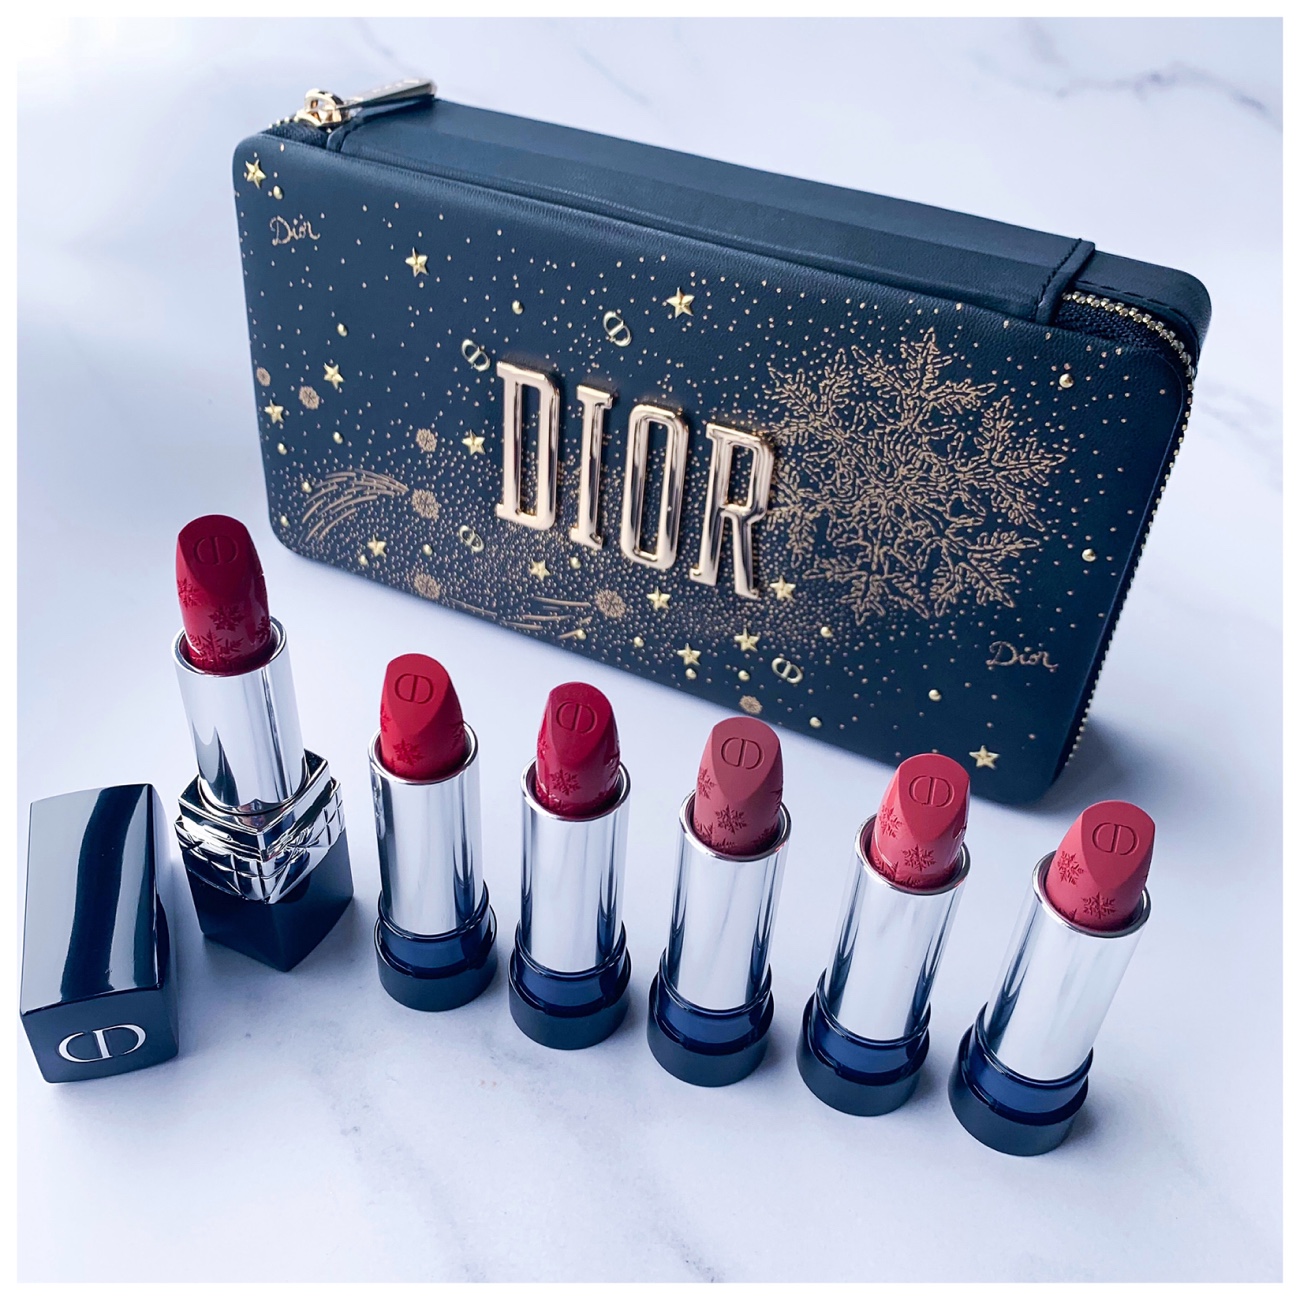 dior rouge lipstick set